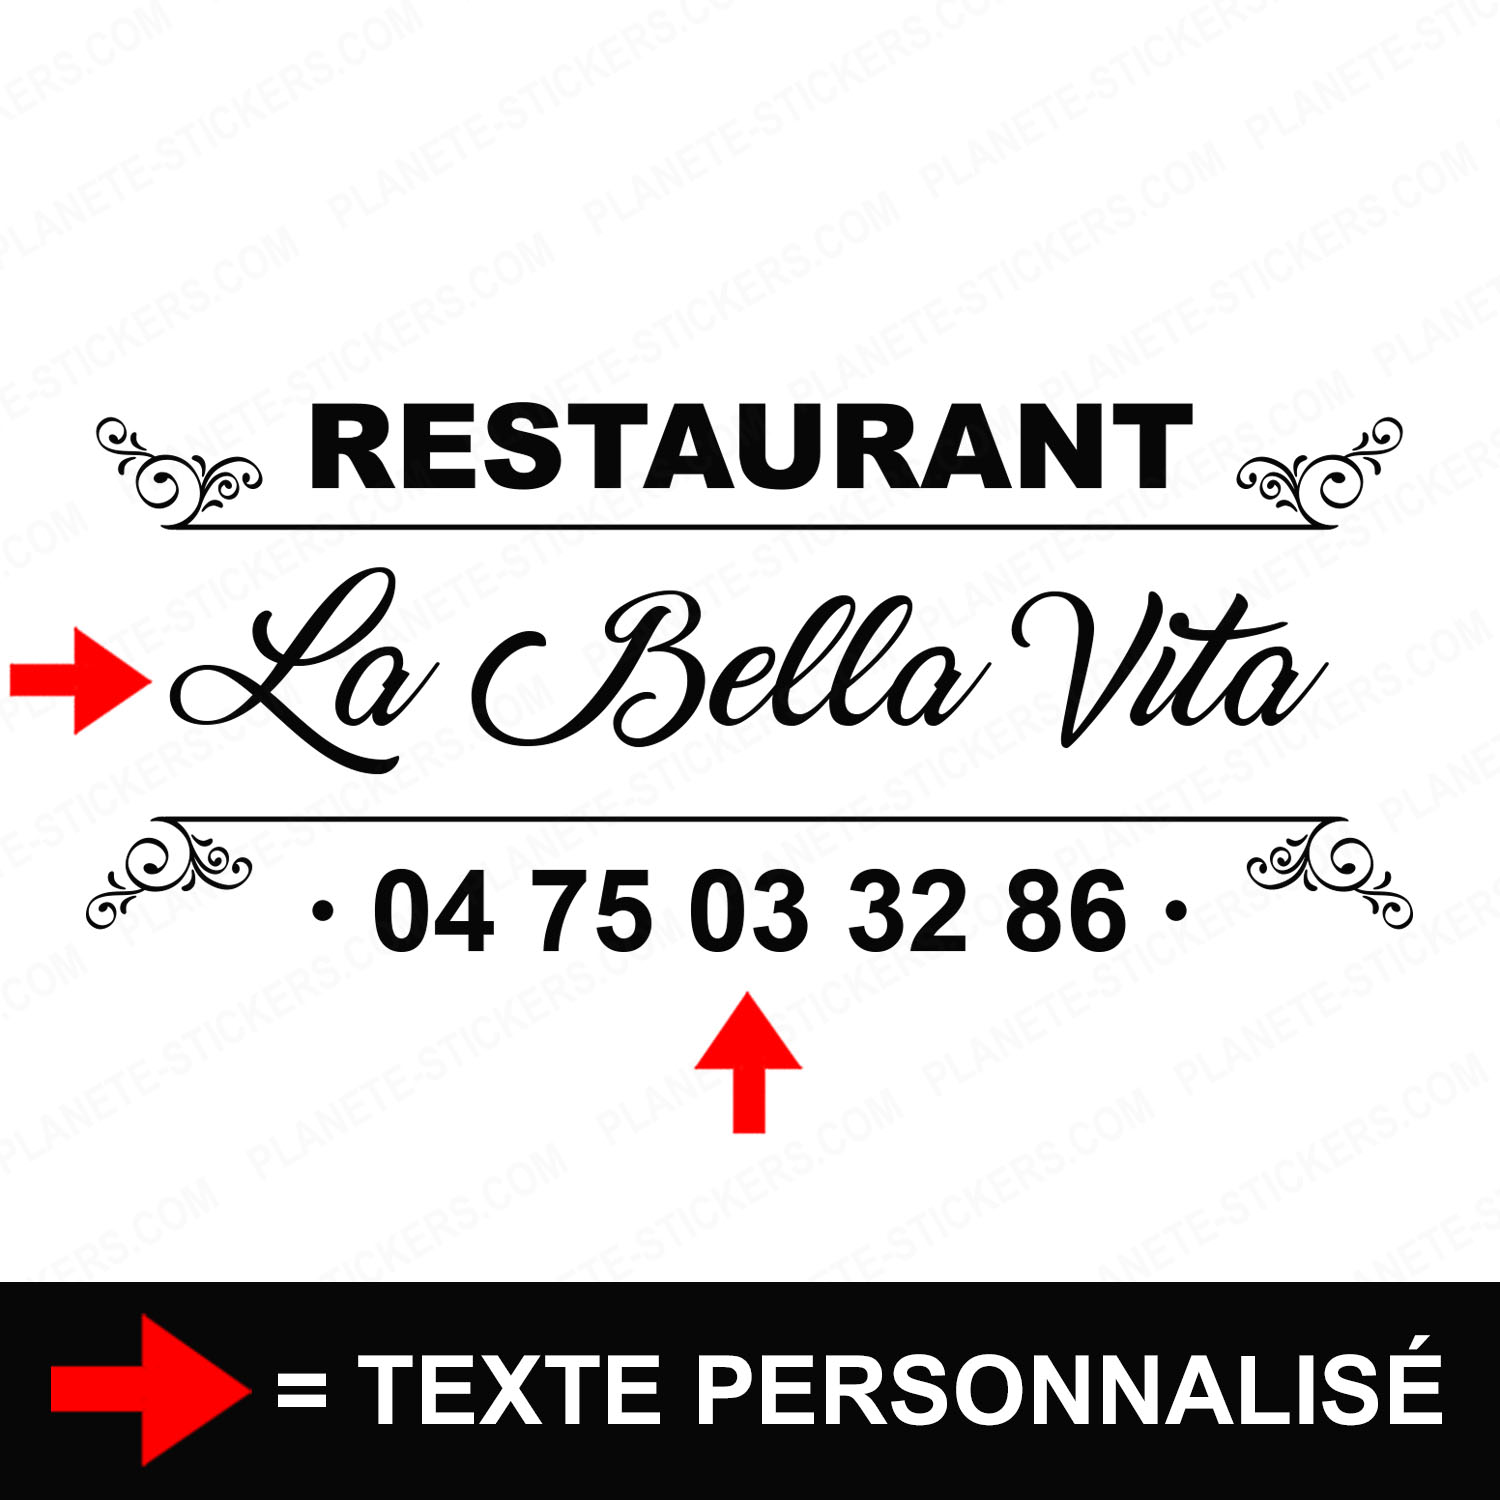 ref22restaurantvitrine-stickers-restaurant-vitrine-restaurant-sticker-personnalisé-autocollant-pro-restaurateur-vitre-resto-professionnel-logo-écriture-2